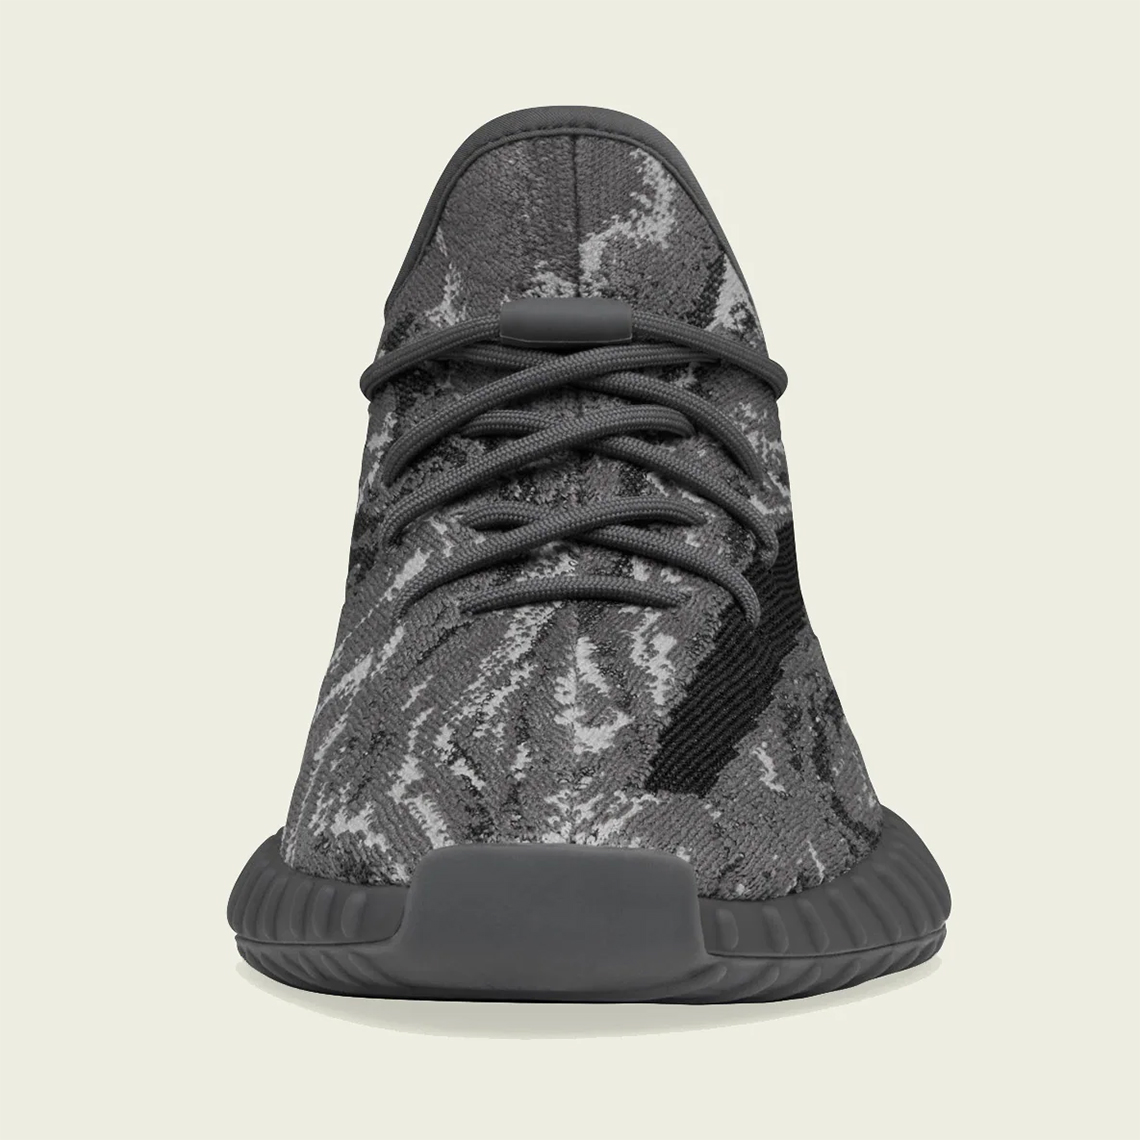 Adidas Yeezy Boost 350 V2 MX Dark Salt UK 9 Sneaker